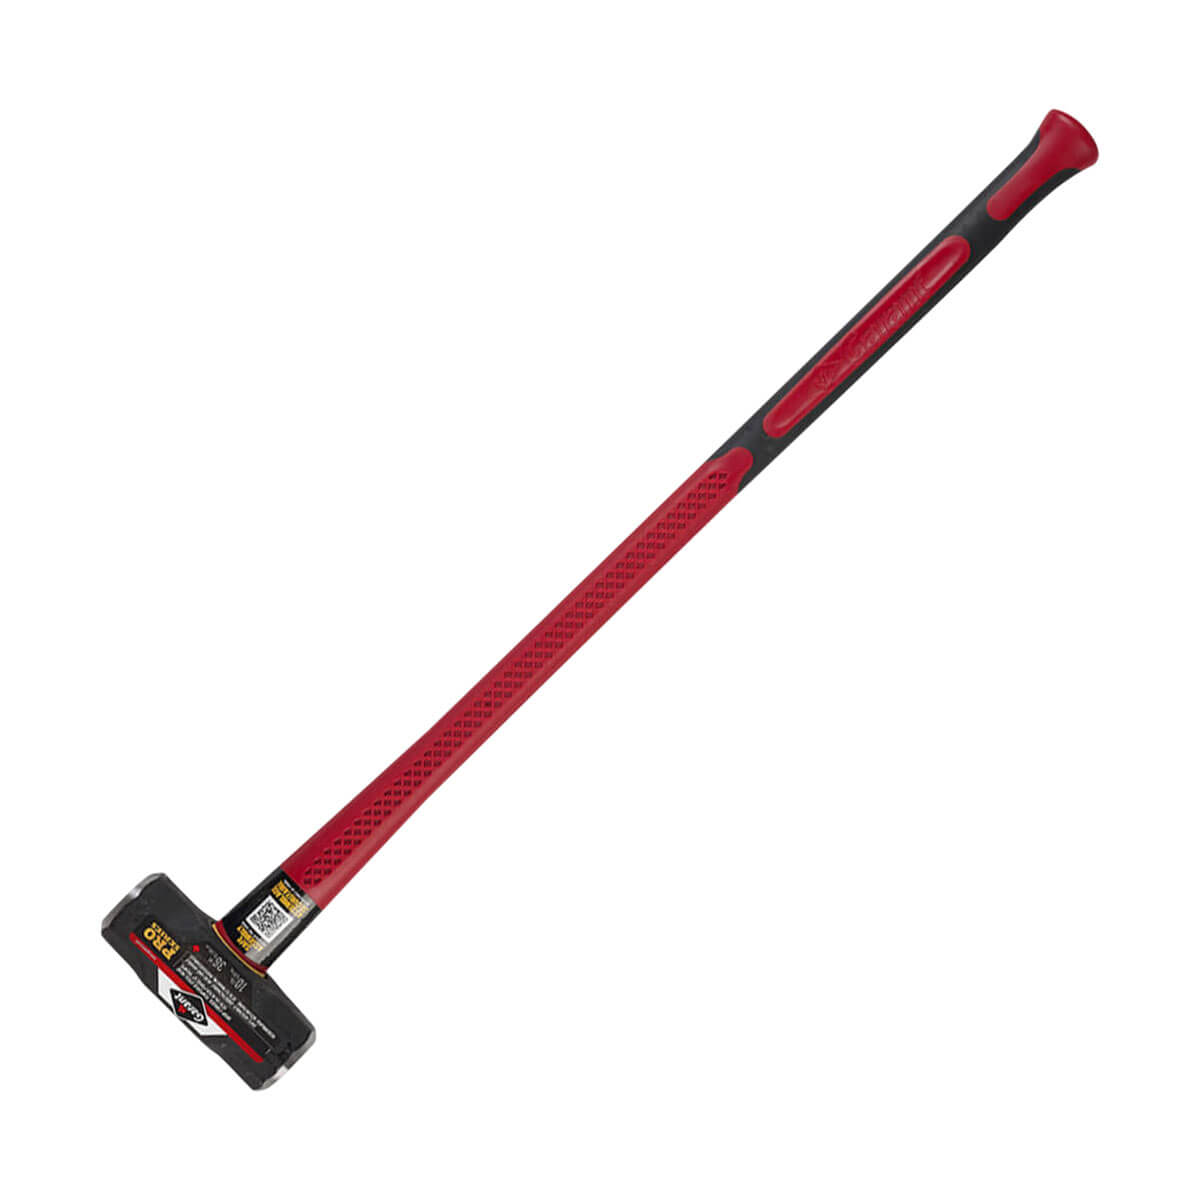 Sledge Hammer - 16-in - 4 lb